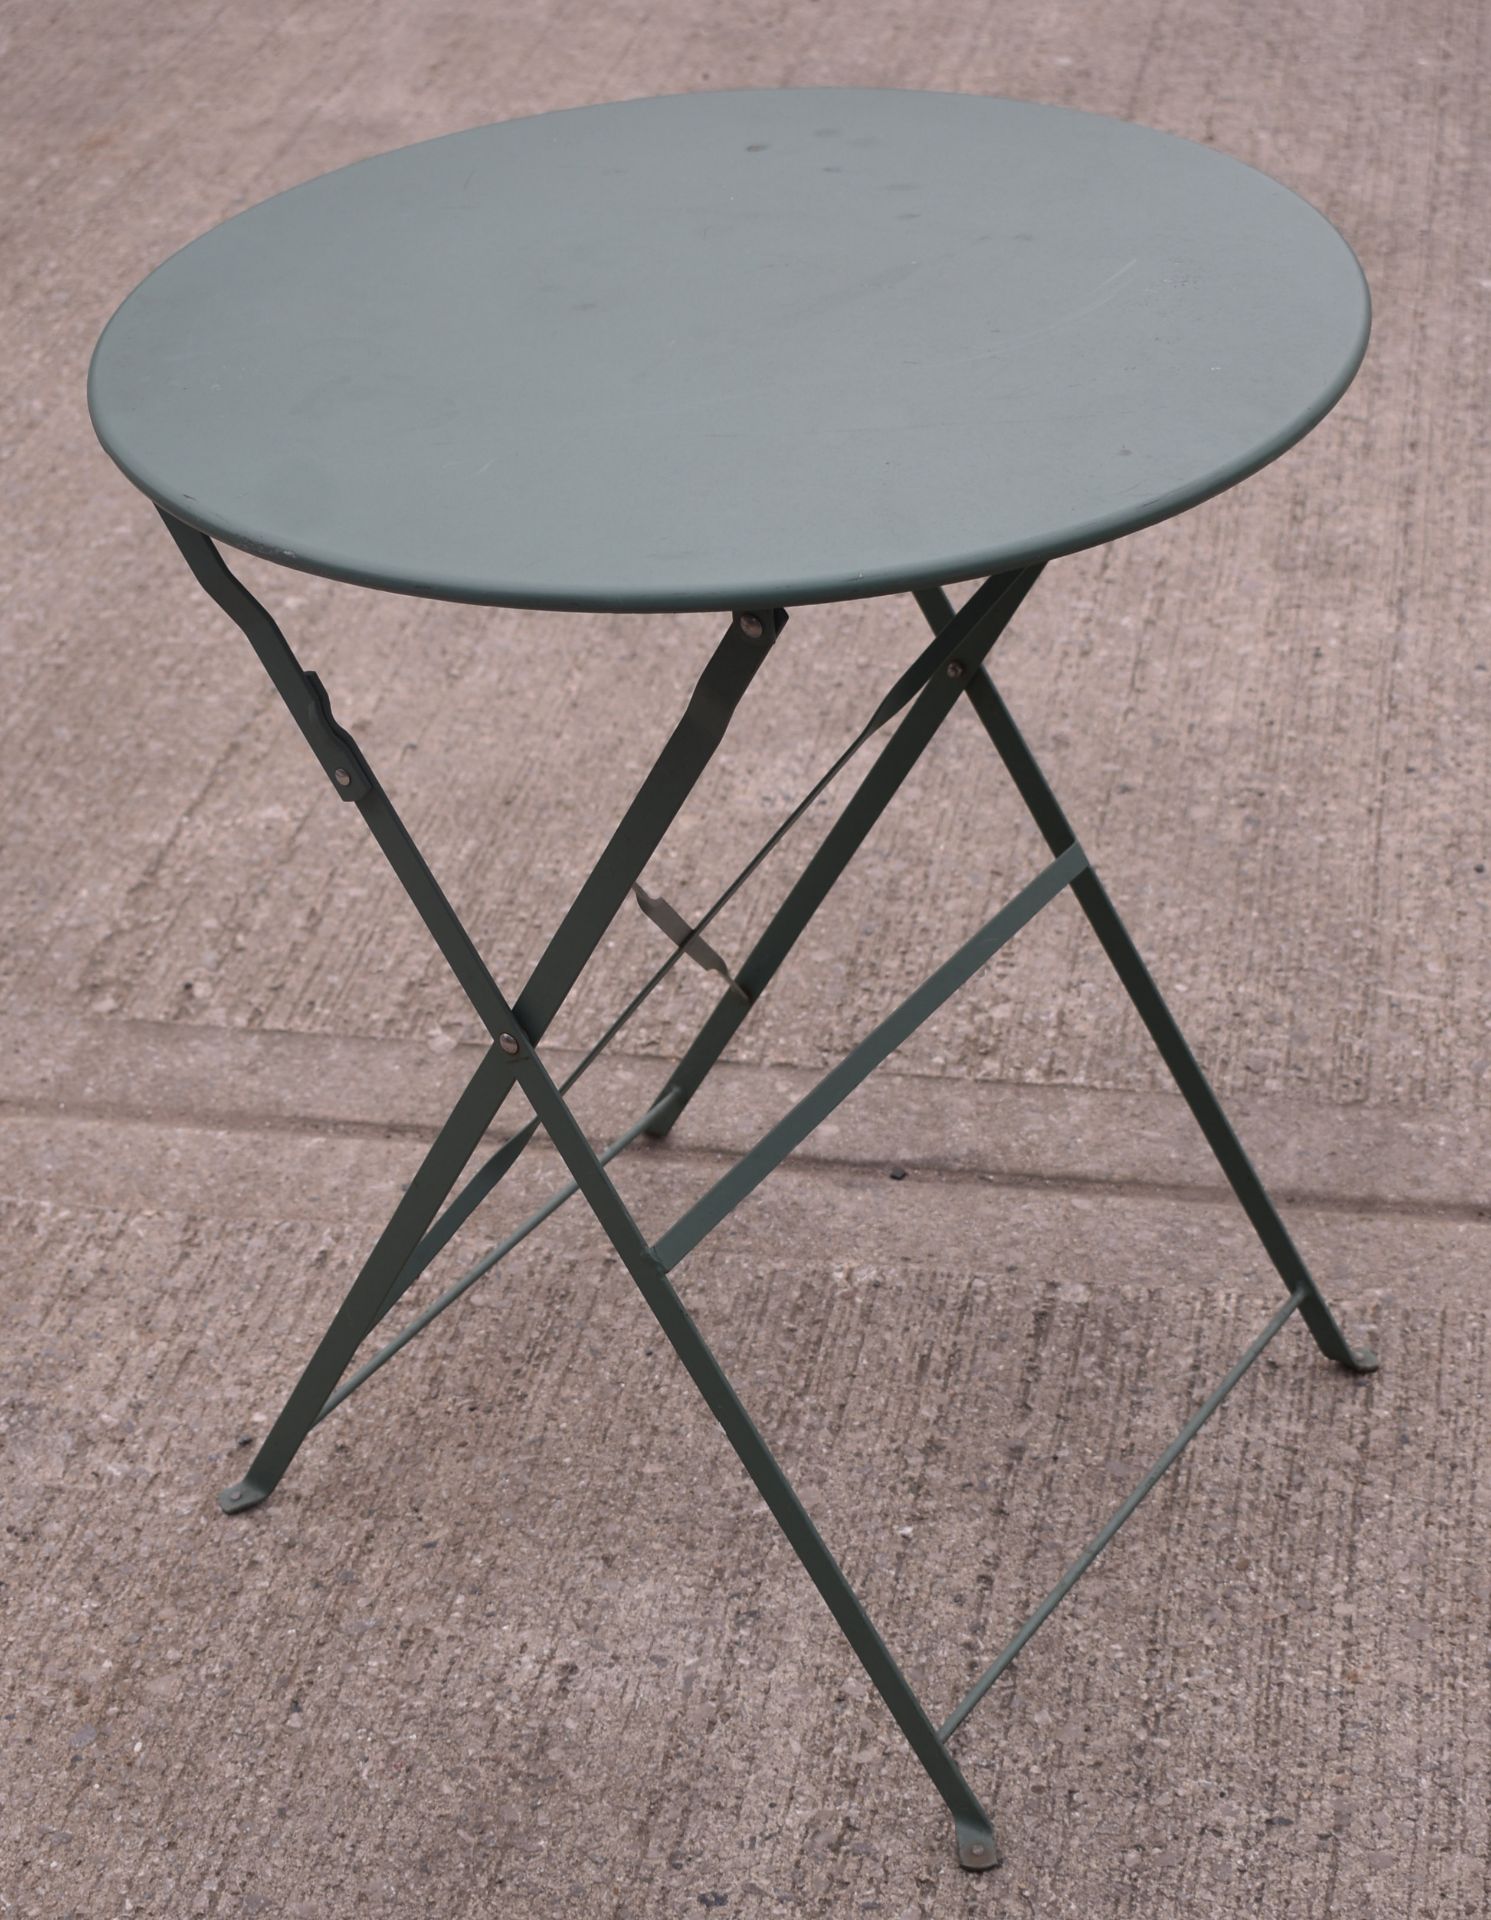 1 x Round Foldaway Green Metal Garden Table - 60 (D) x 71 (H) cms - Ref: K235 - CL905 - Location: Al